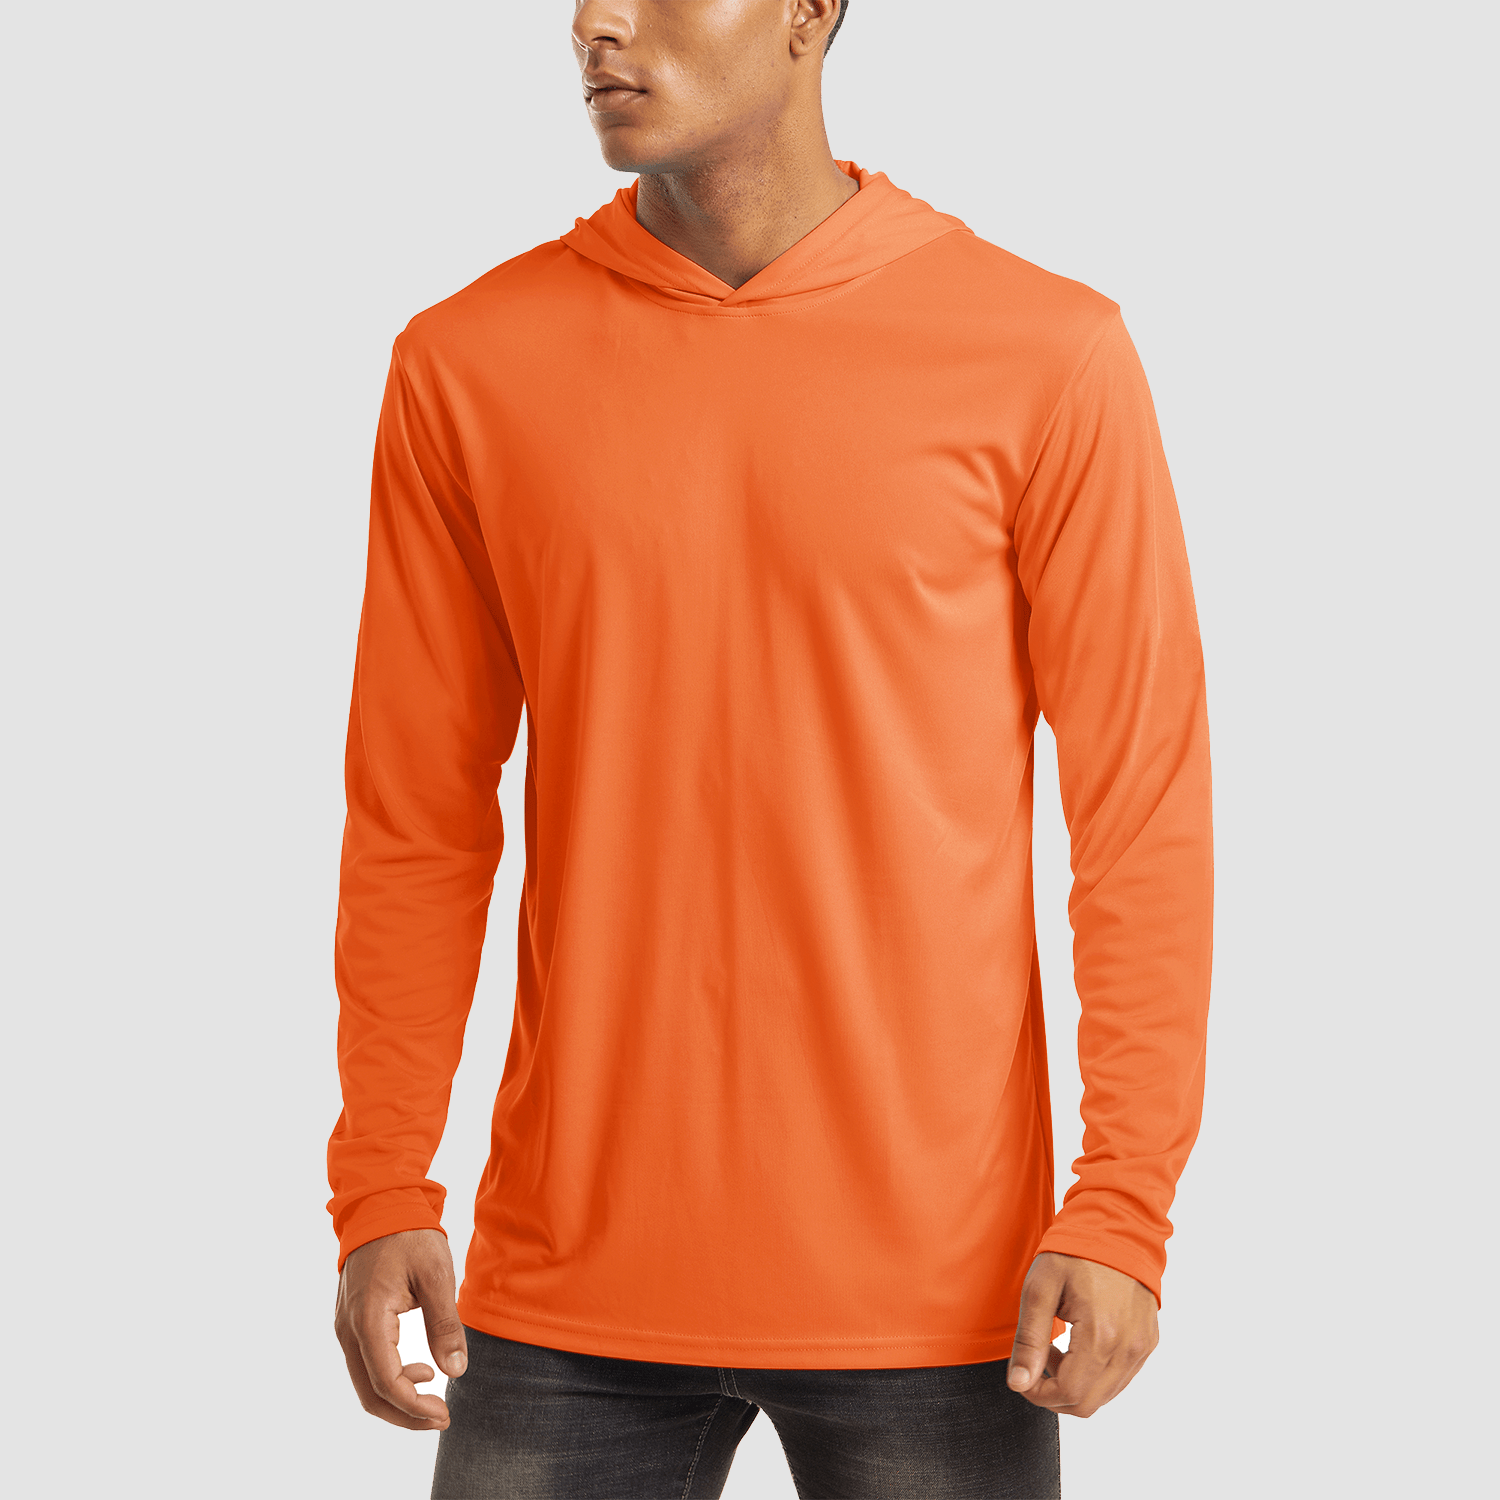 Buy 4 Get 4th Free】Men's Long Sleeve Hooded Shirt UPF 50+ Athletic Sh –  MAGCOMSEN